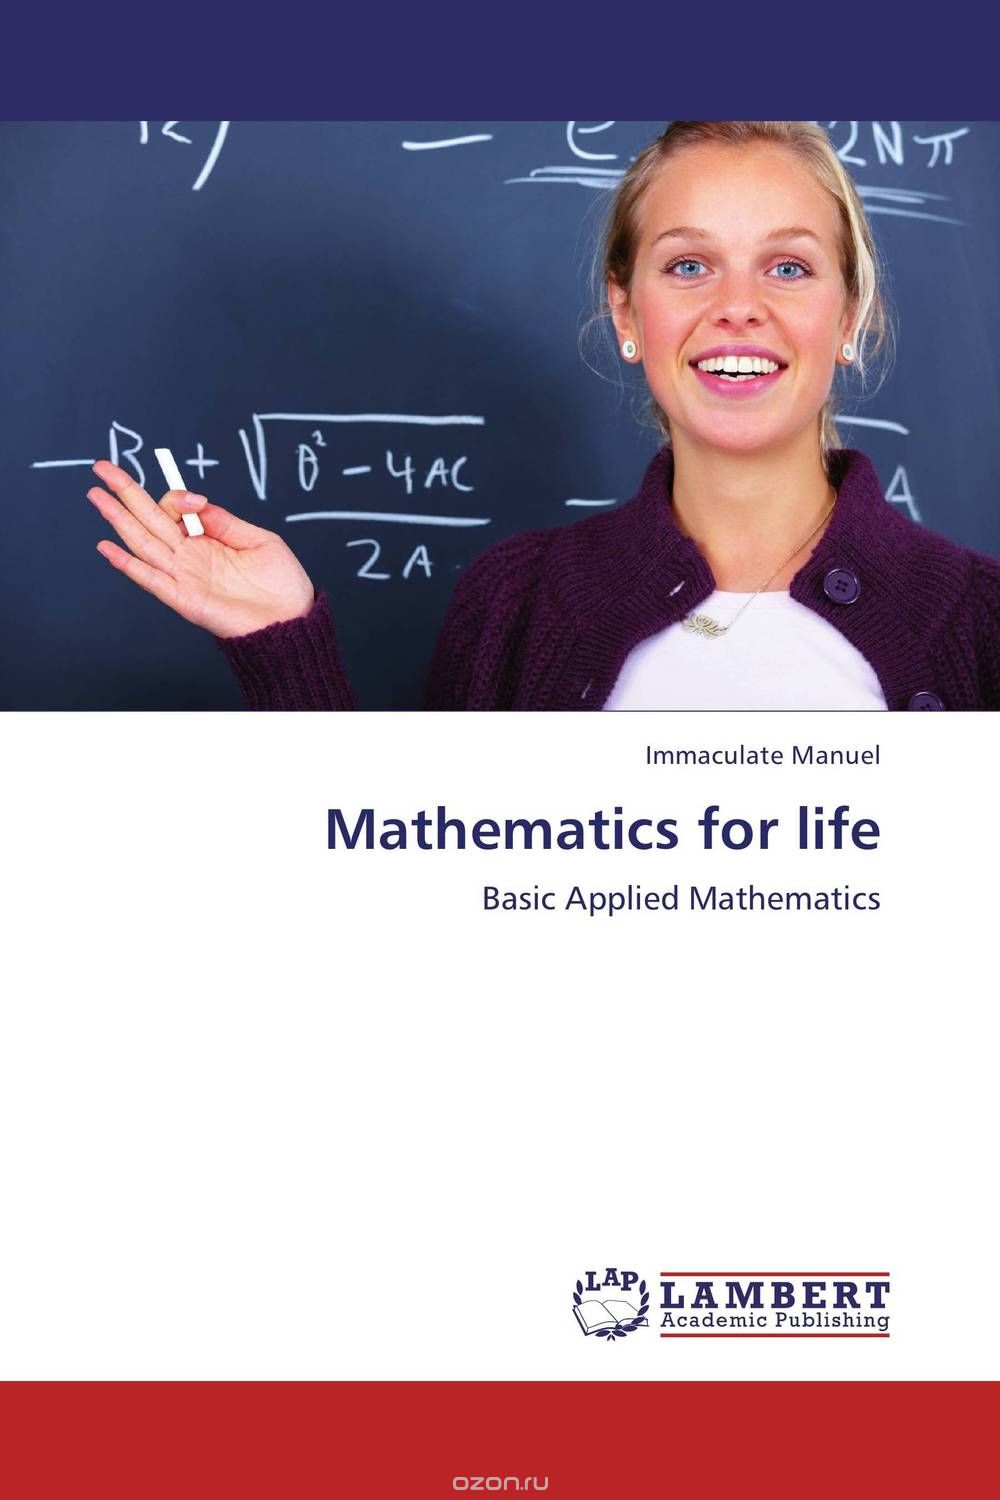 Mathematics for life